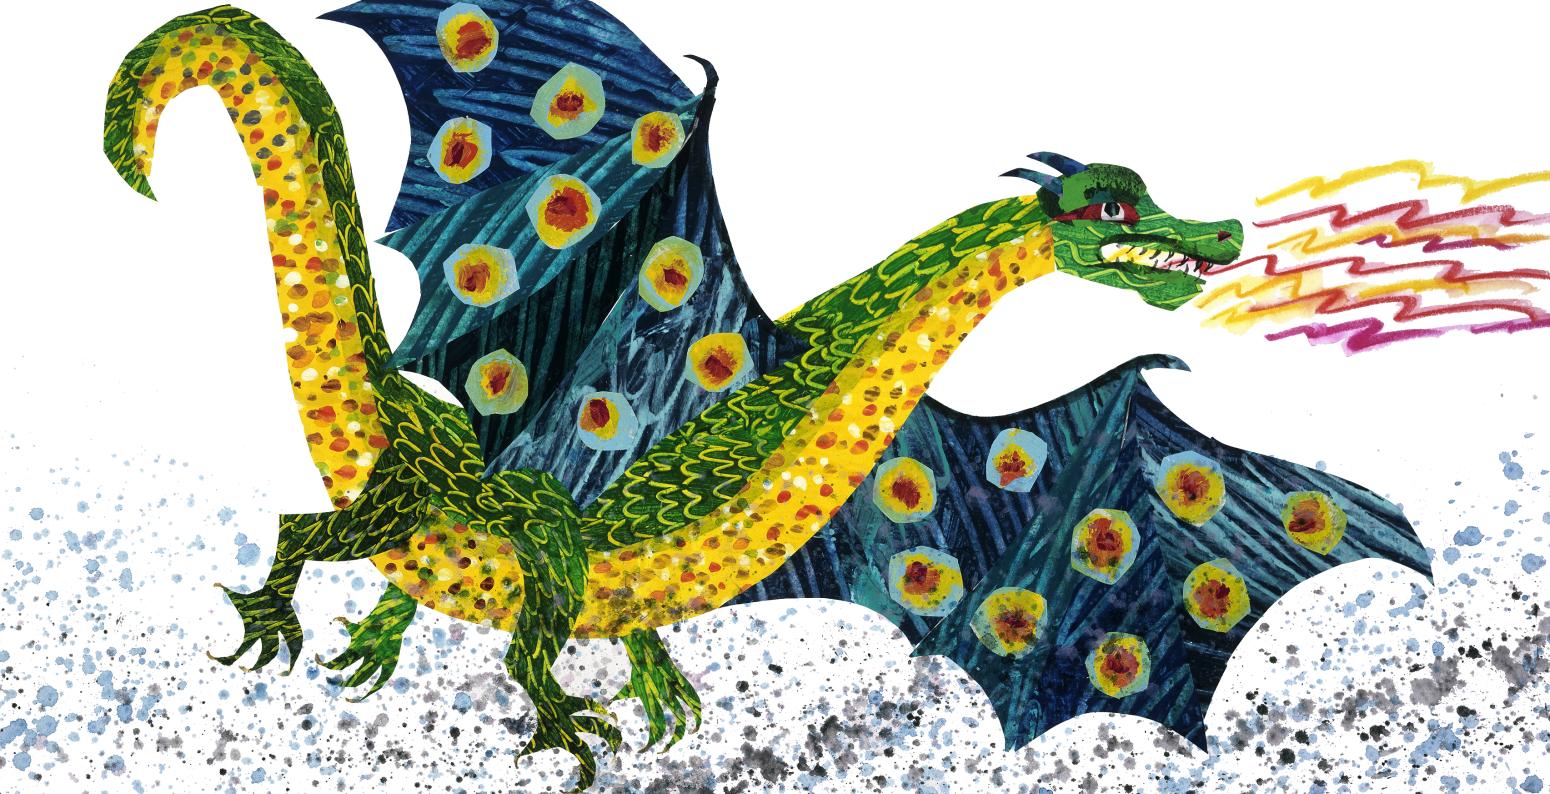 Illustration of fire breathing dragon. 